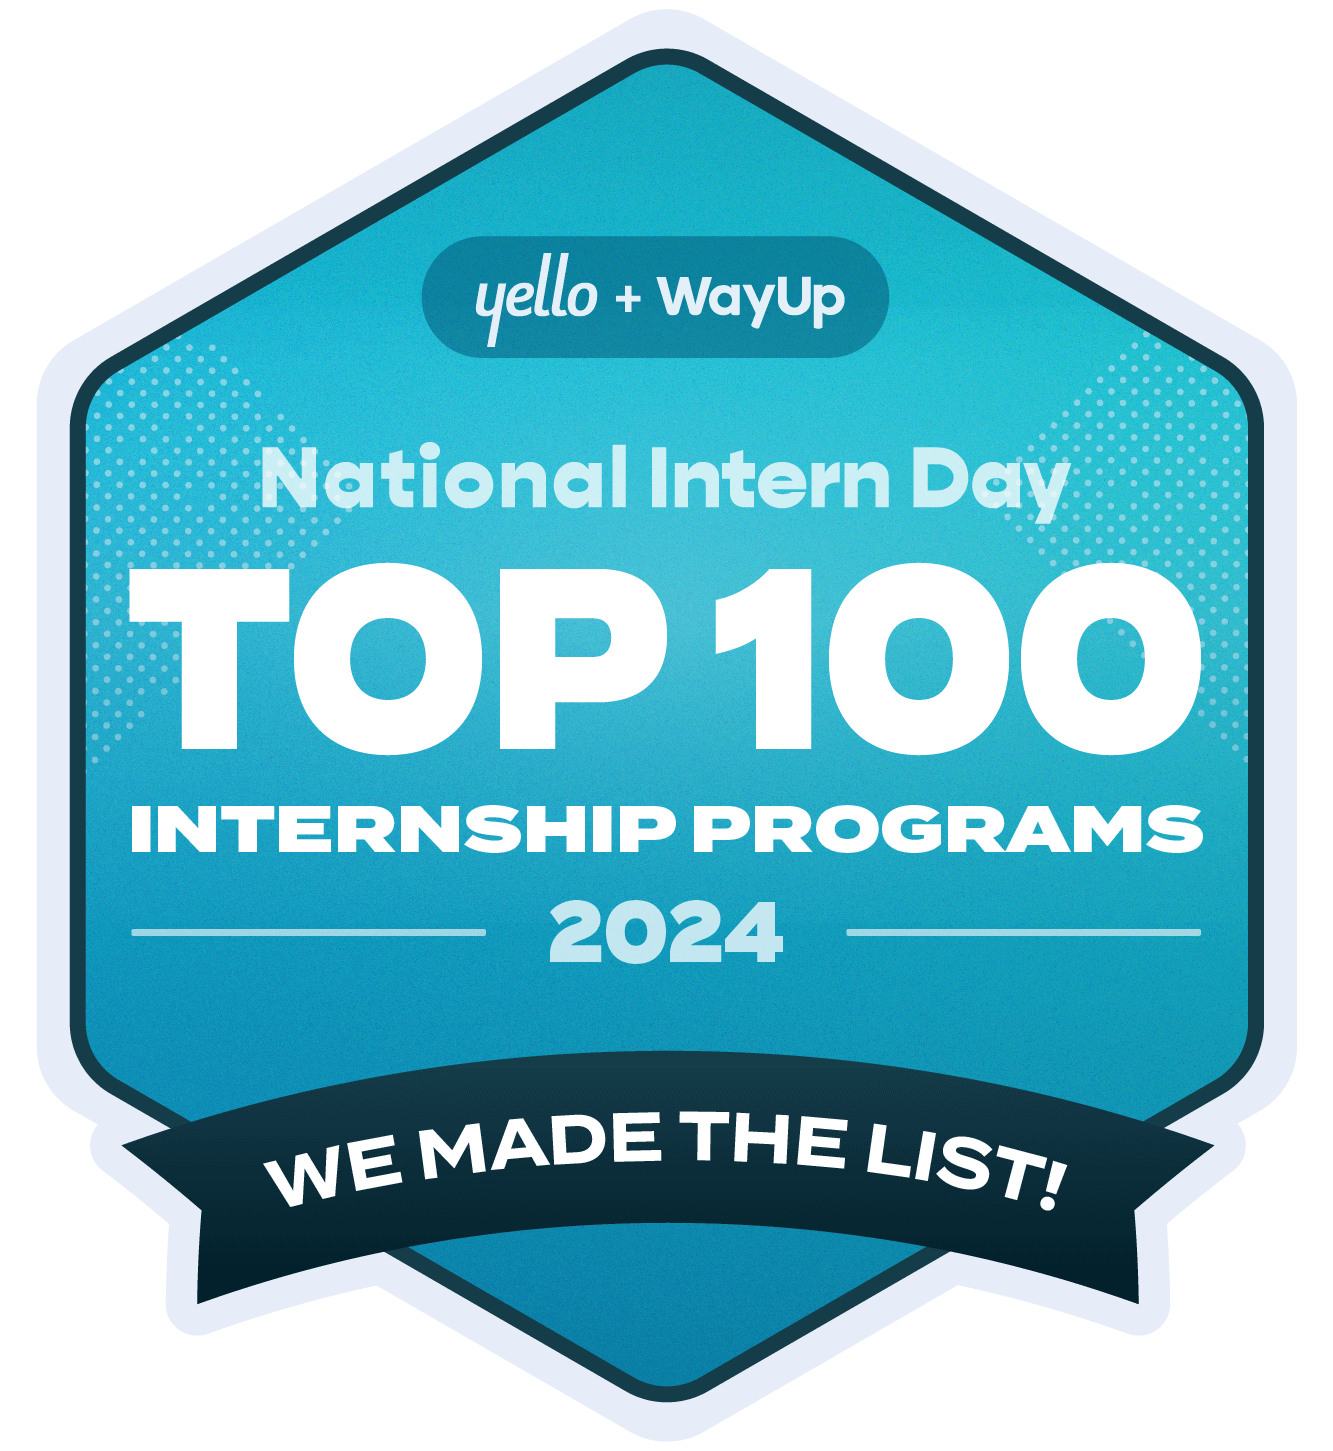 Yello + WayUp Top 100 Internship Programs 2024